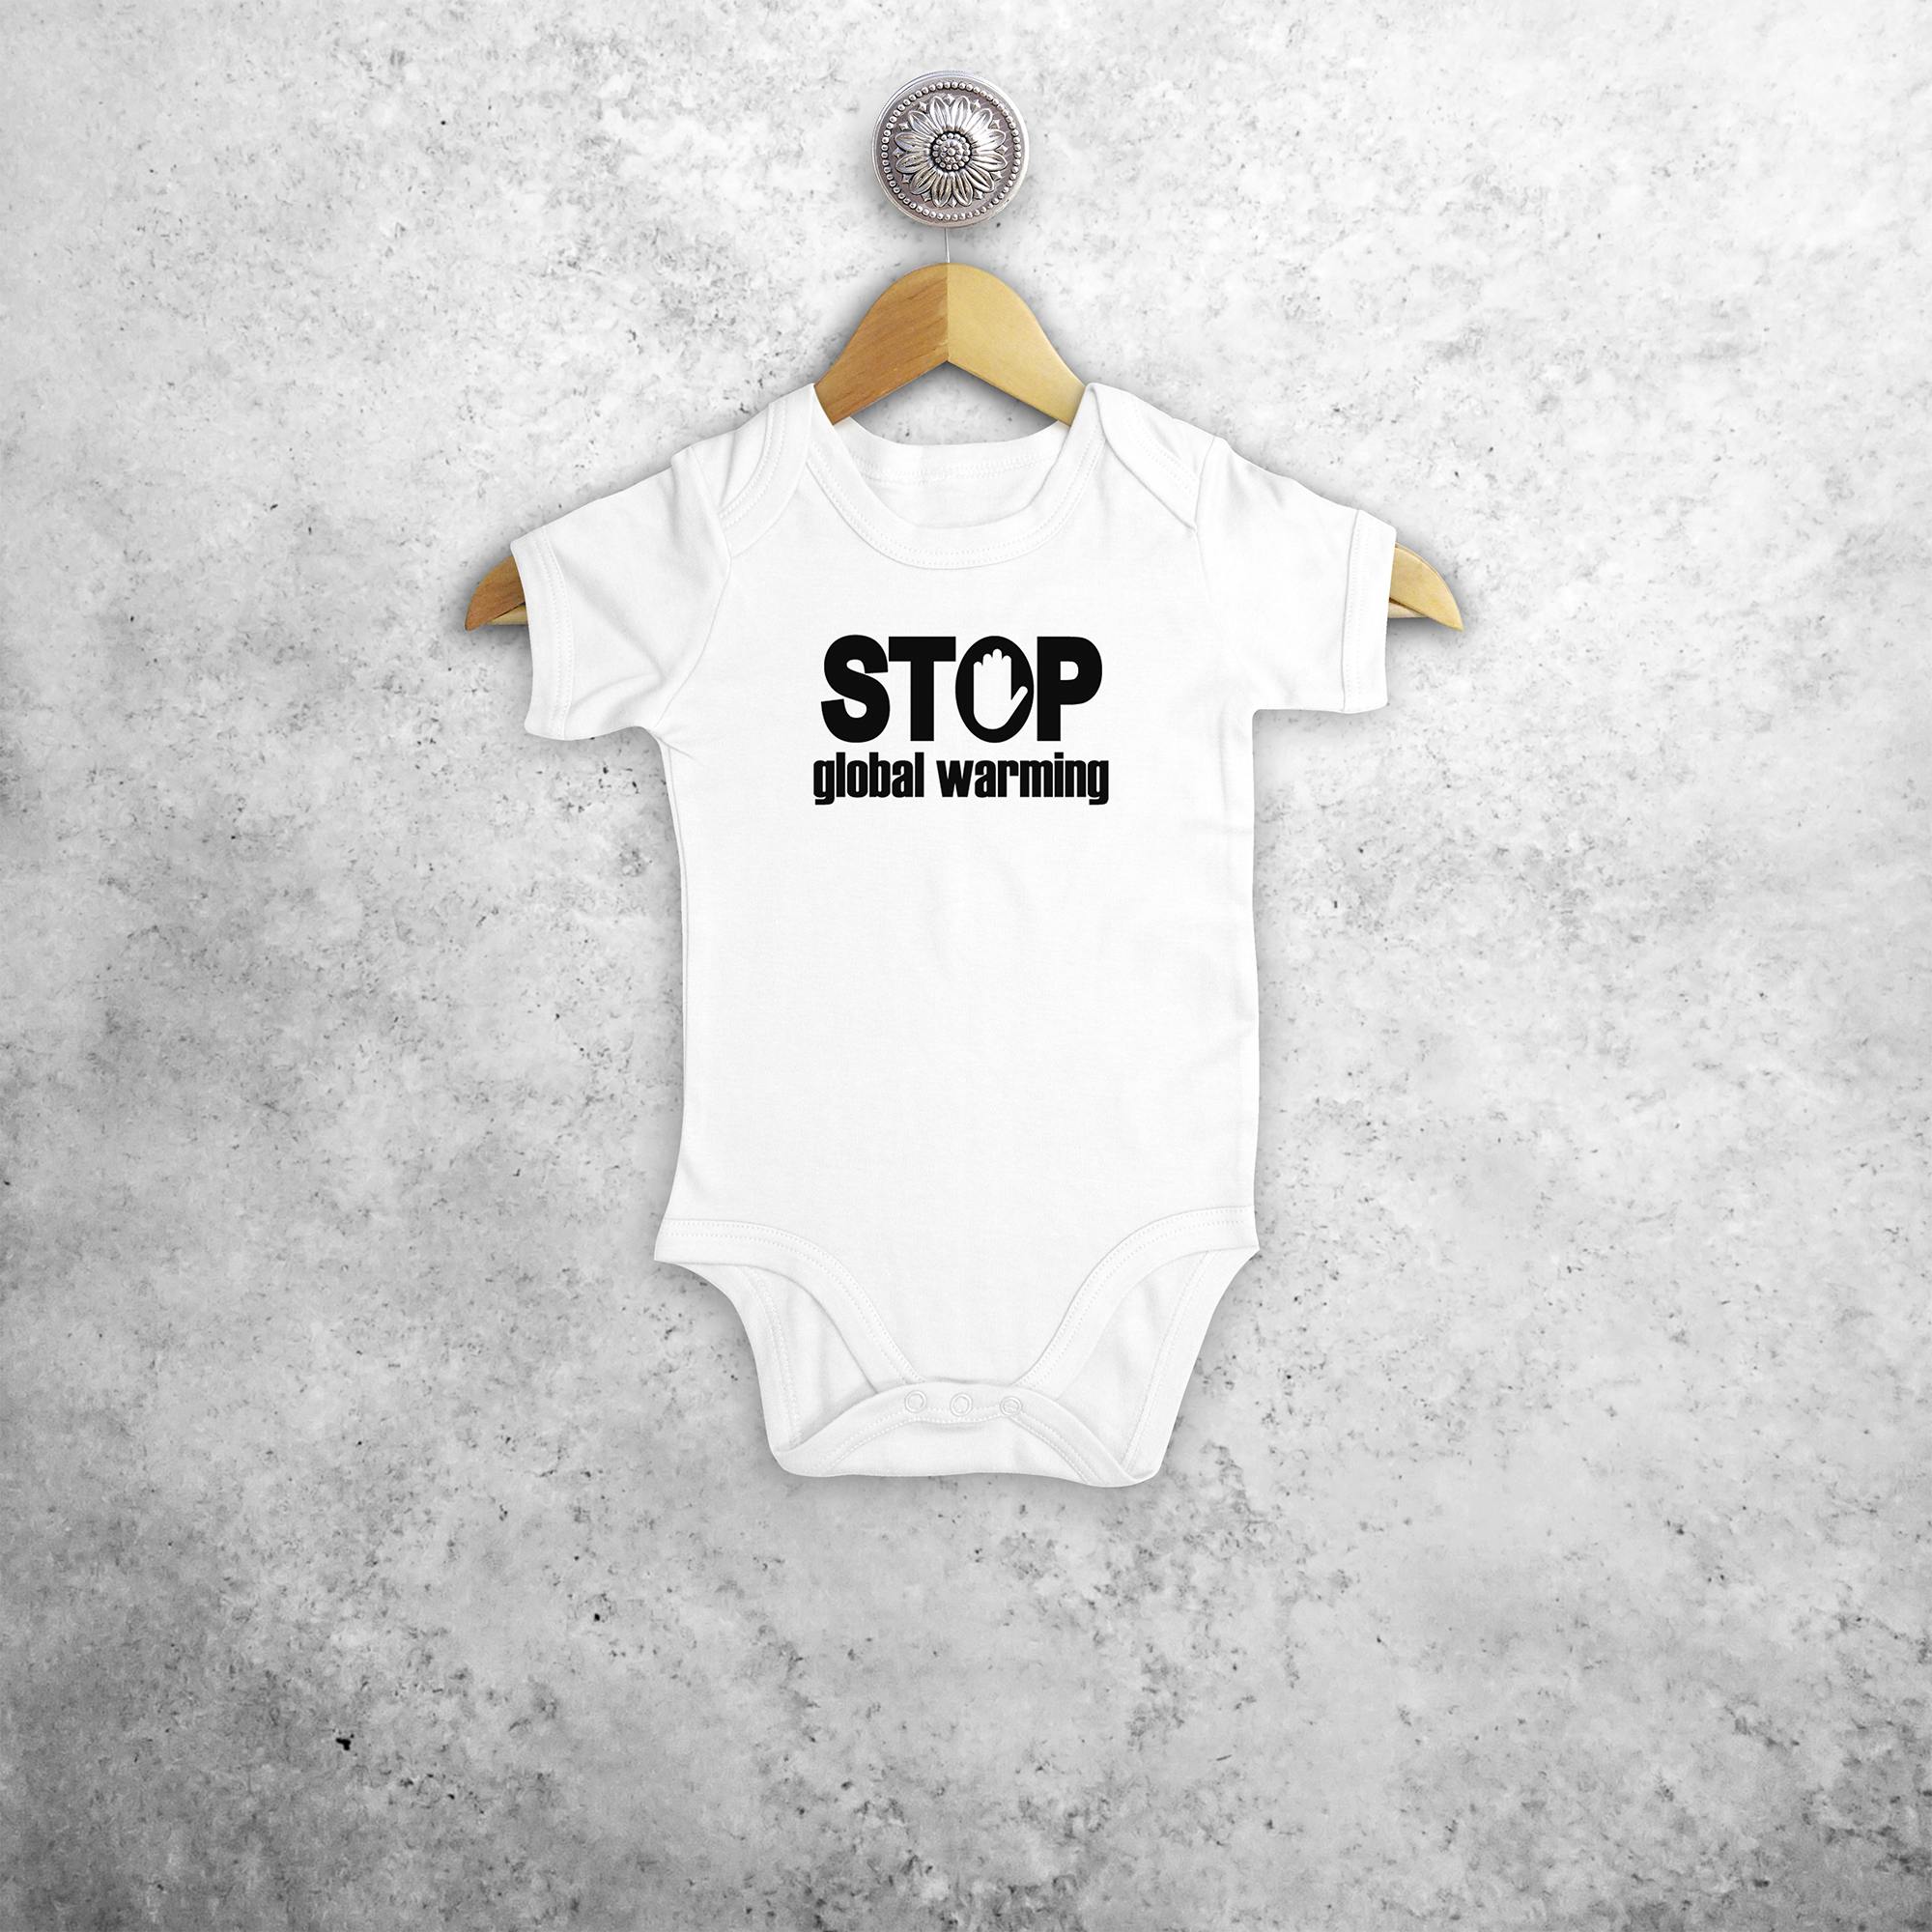 'Stop global warming' baby shortsleeve bodysuit